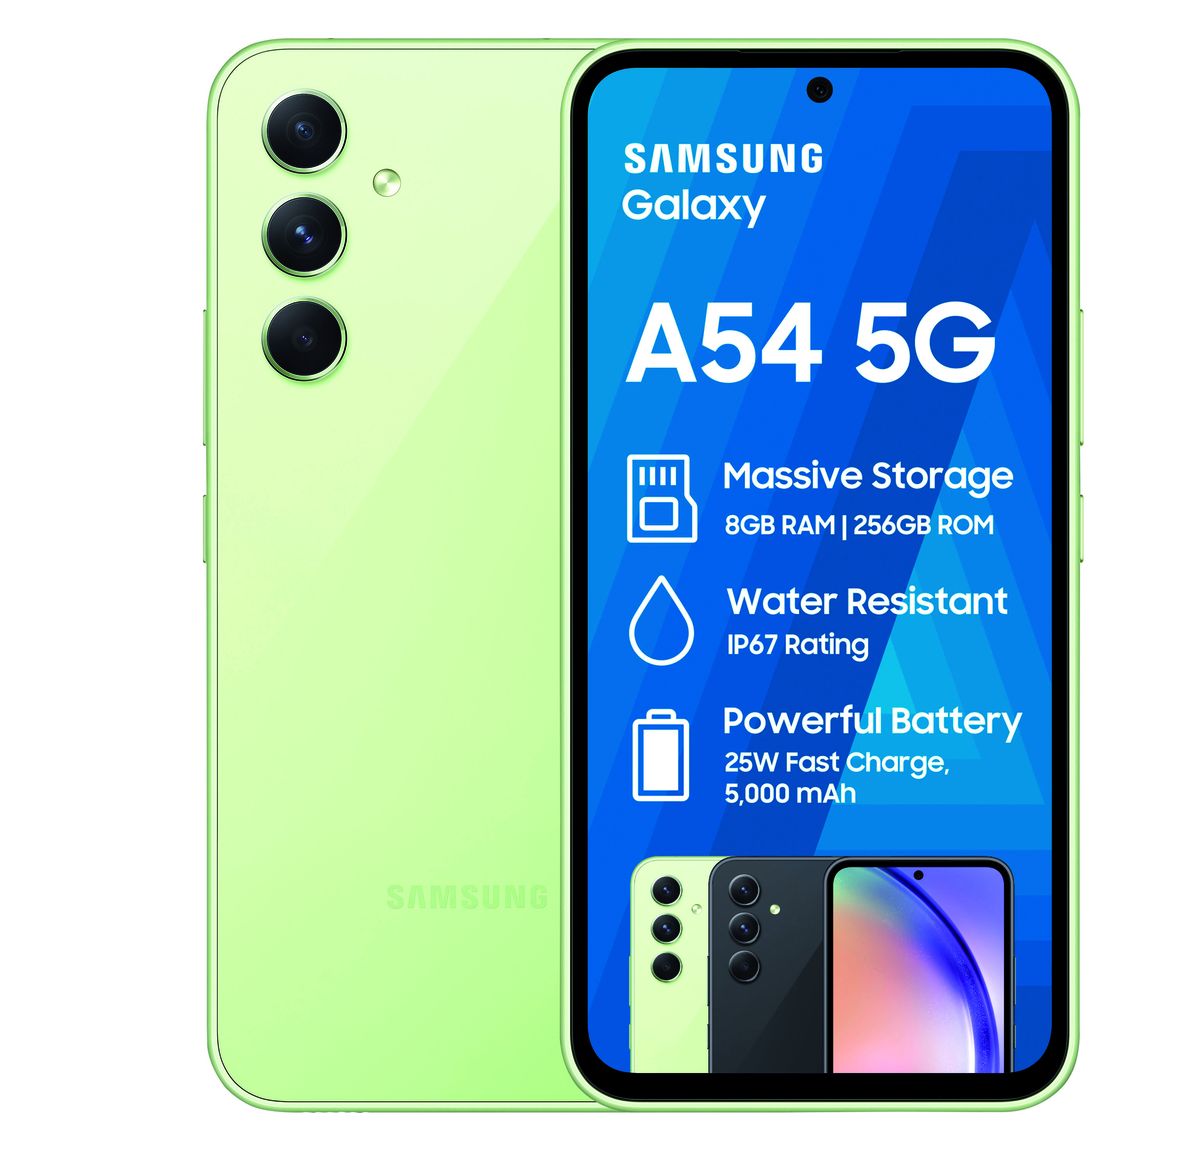 Samsung Galaxy A54 5G 256GB Dual Sim - Awesome Lime